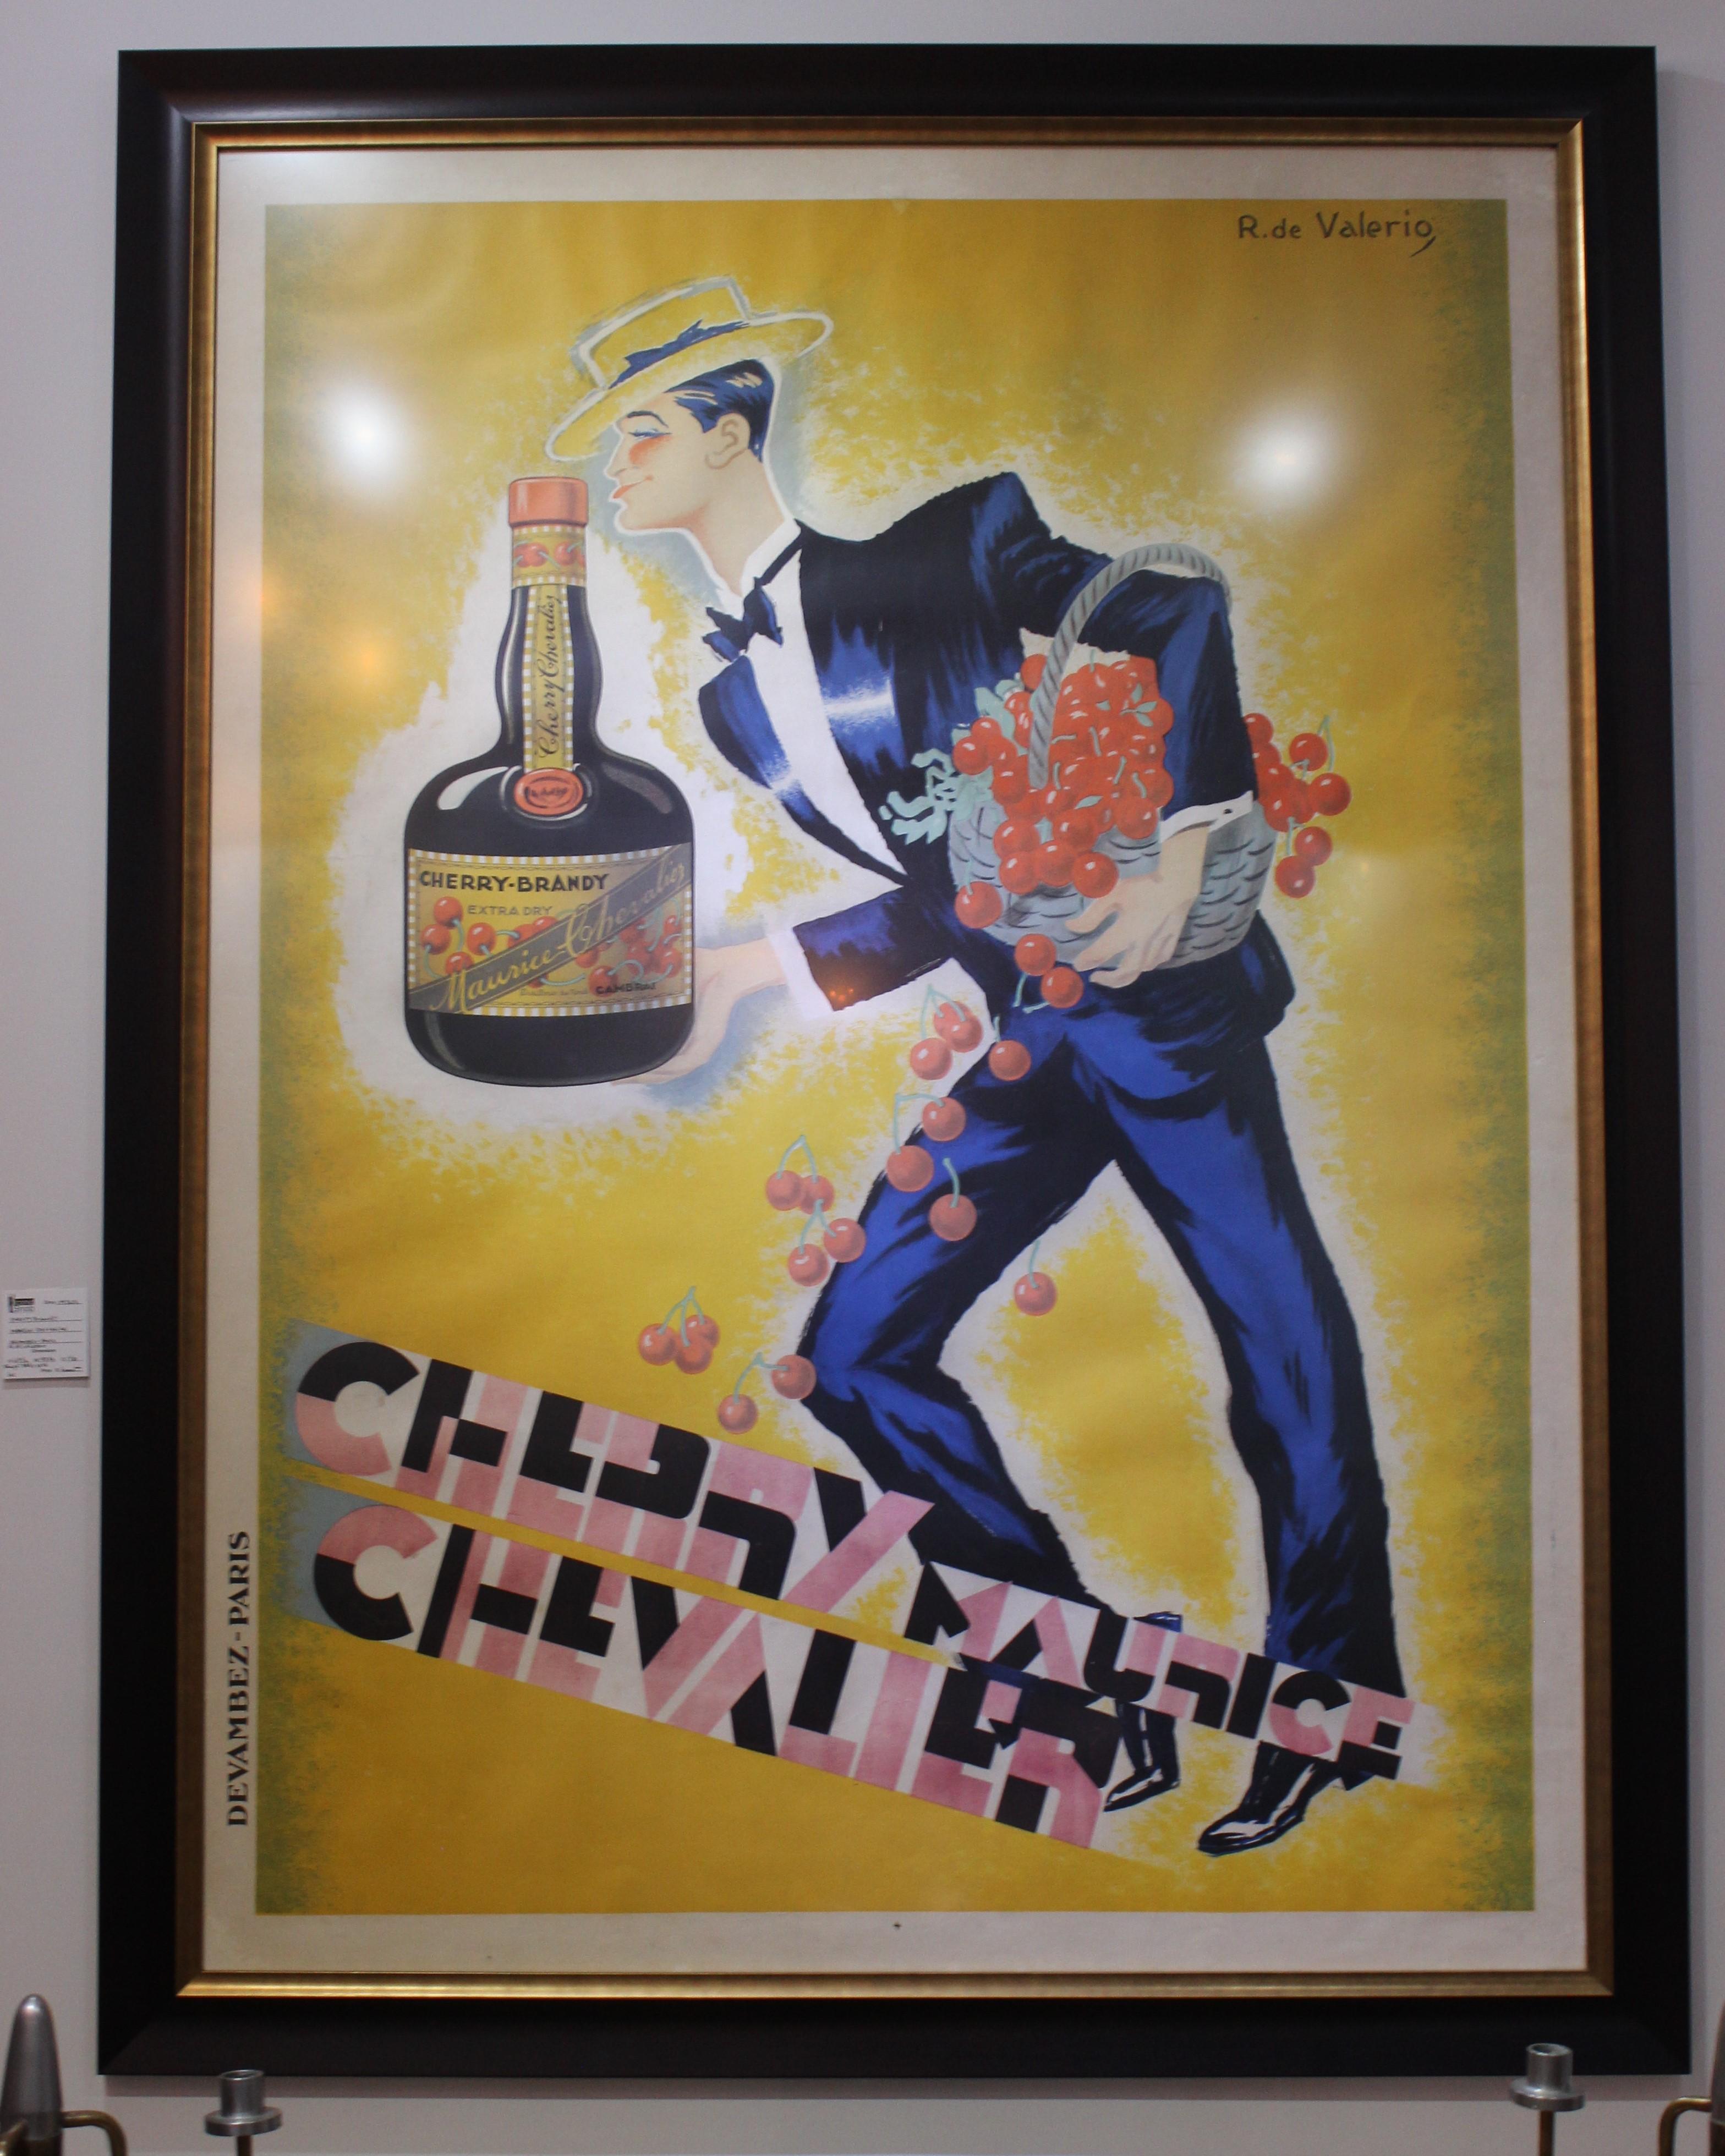 Roger de Valerio Cherry Maurice Chevalier Poster, 1935 For Sale 2